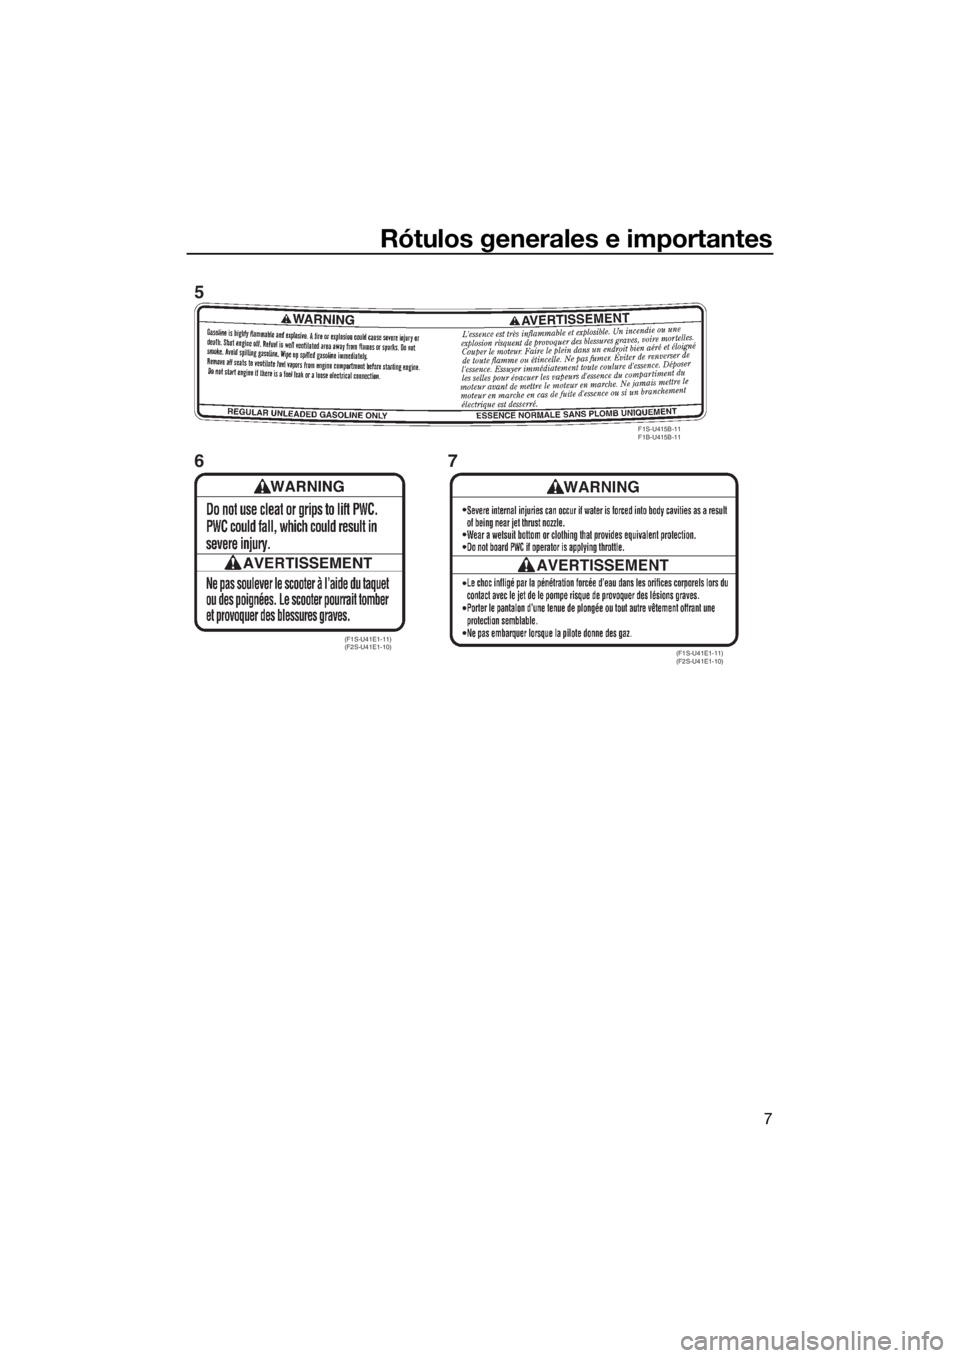 YAMAHA FX HO CRUISER 2015  Manuale de Empleo (in Spanish) Rótulos generales e importantes
7
F1S-U415B-11 
F1B-U415B-11
(F1S-U41E1-11) 
(F2S-U41E1-10)(F1S-U41E1-11) 
(F2S-U41E1-10)
5
67
UF2T74S0.book  Page 7  Thursday, June 26, 2014  9:14 AM 